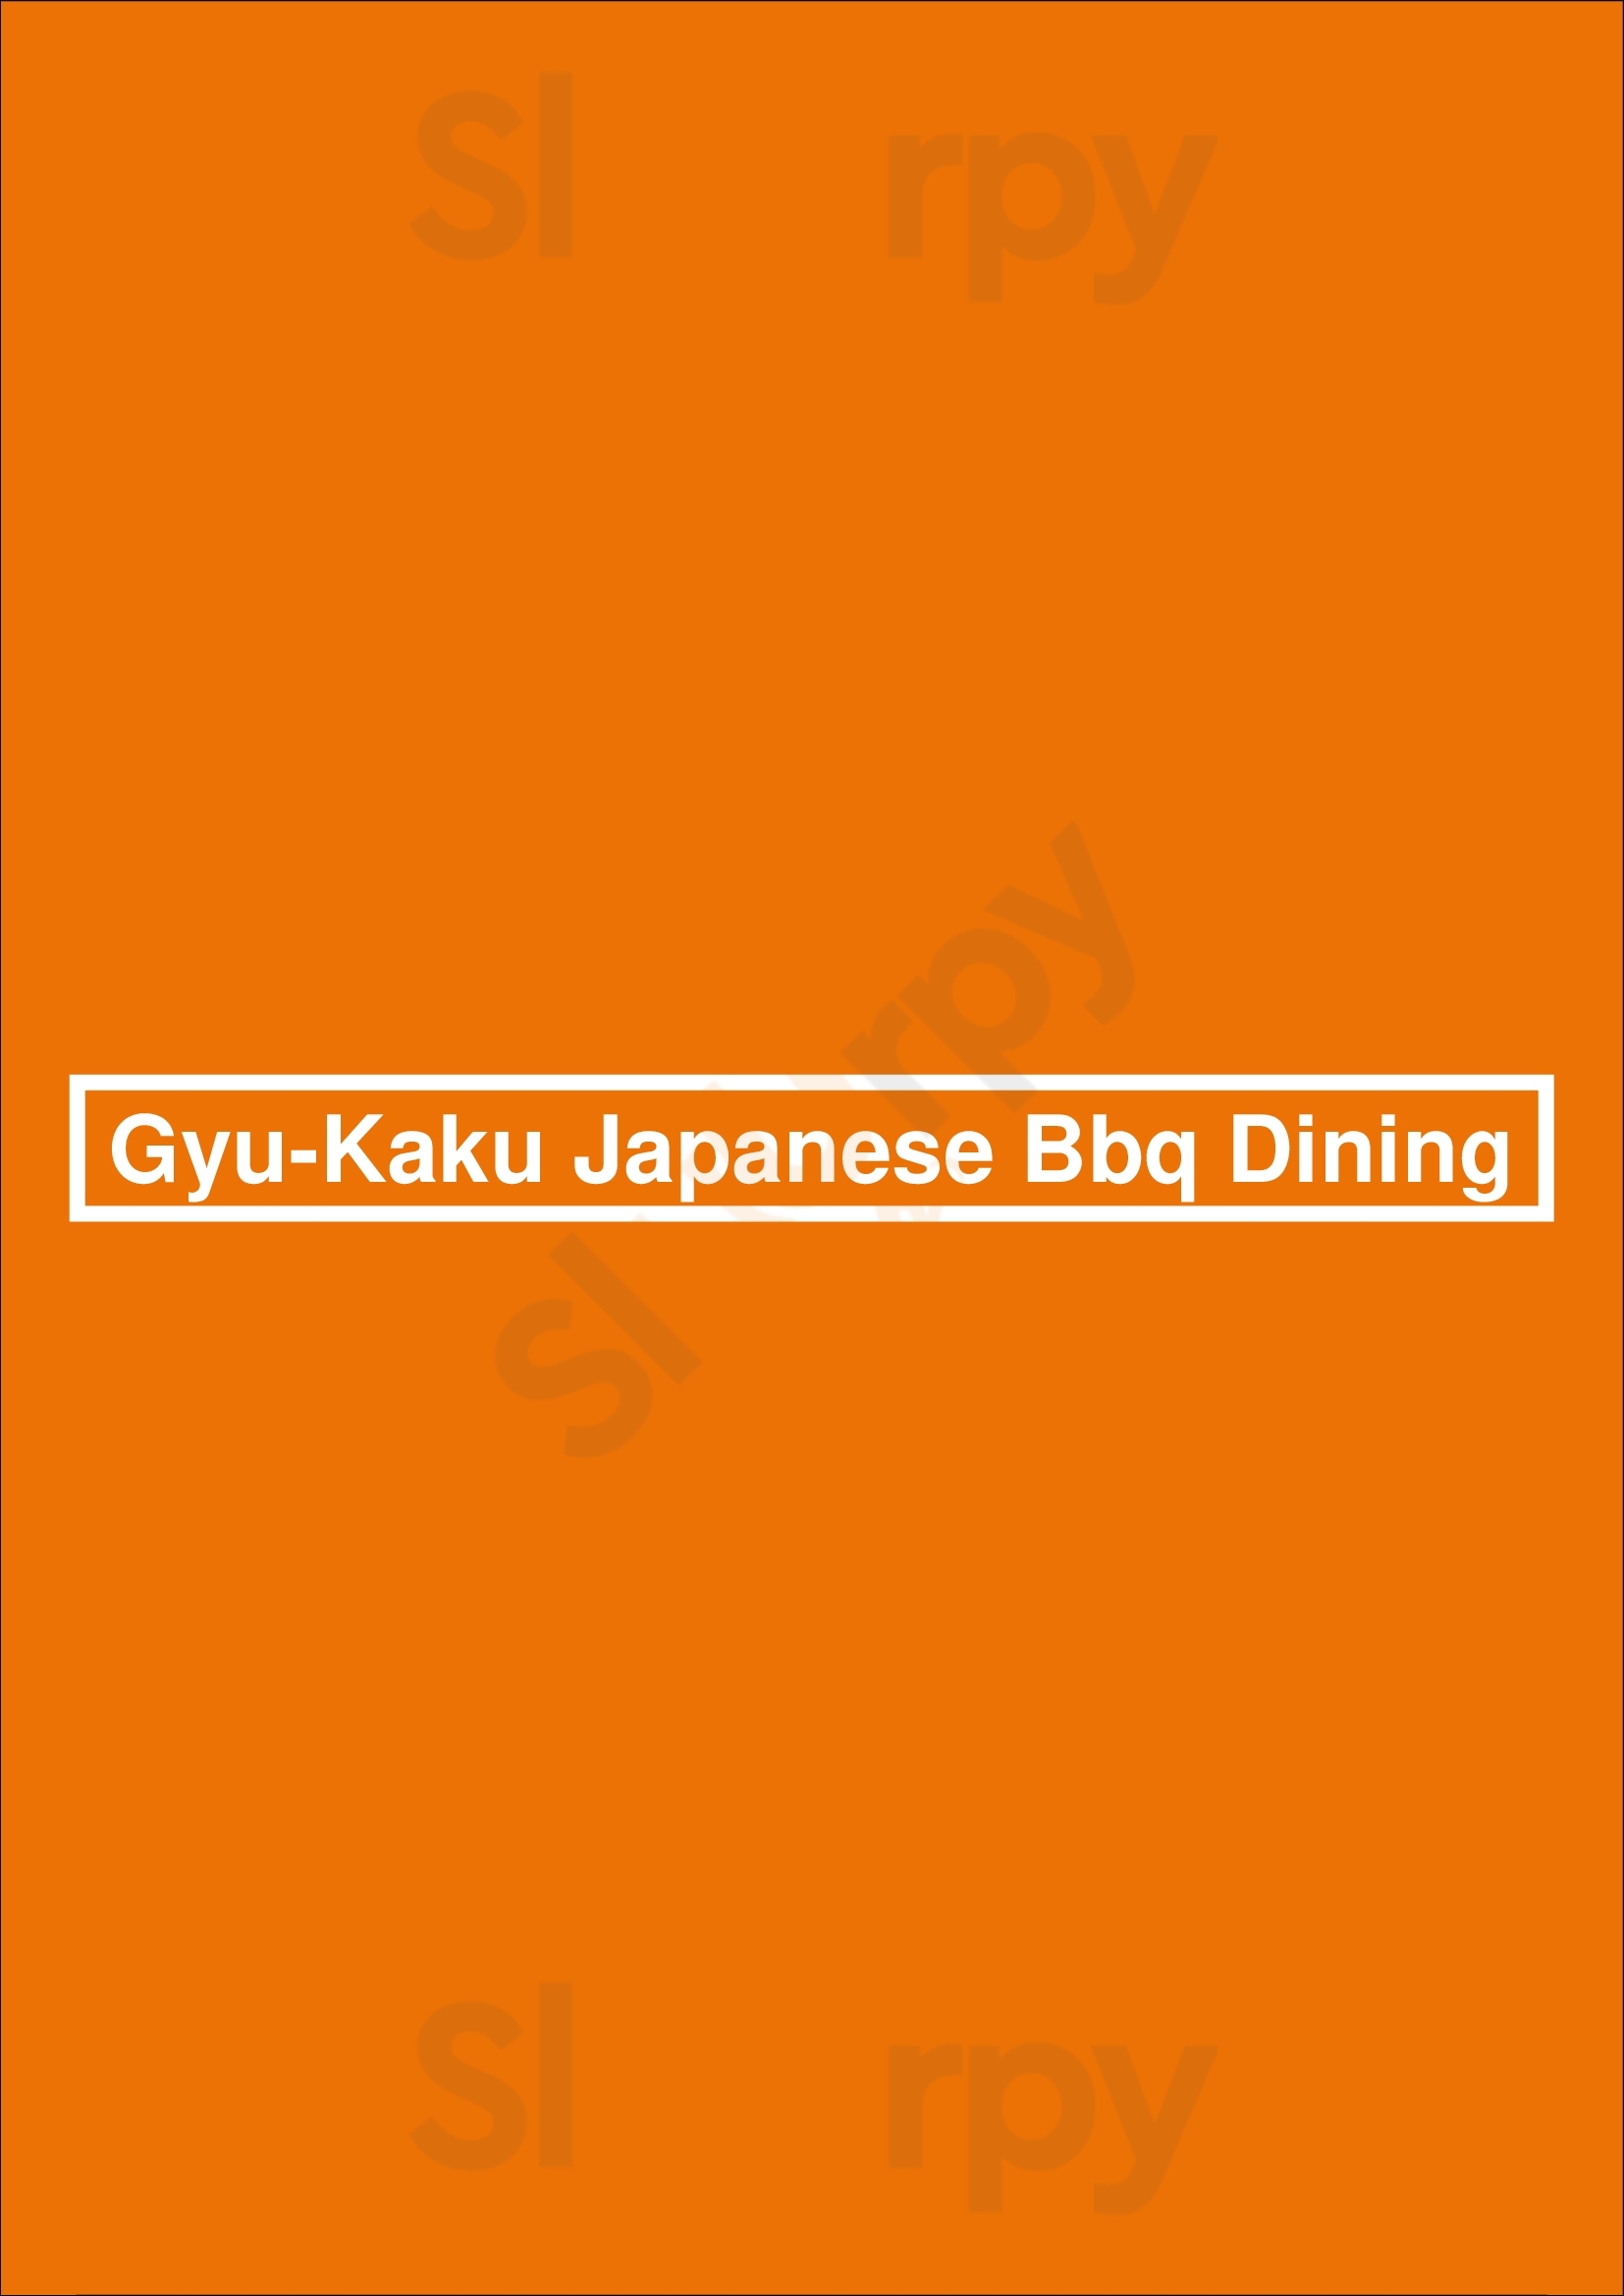 Gyu-kaku Japanese Bbq Houston Menu - 1